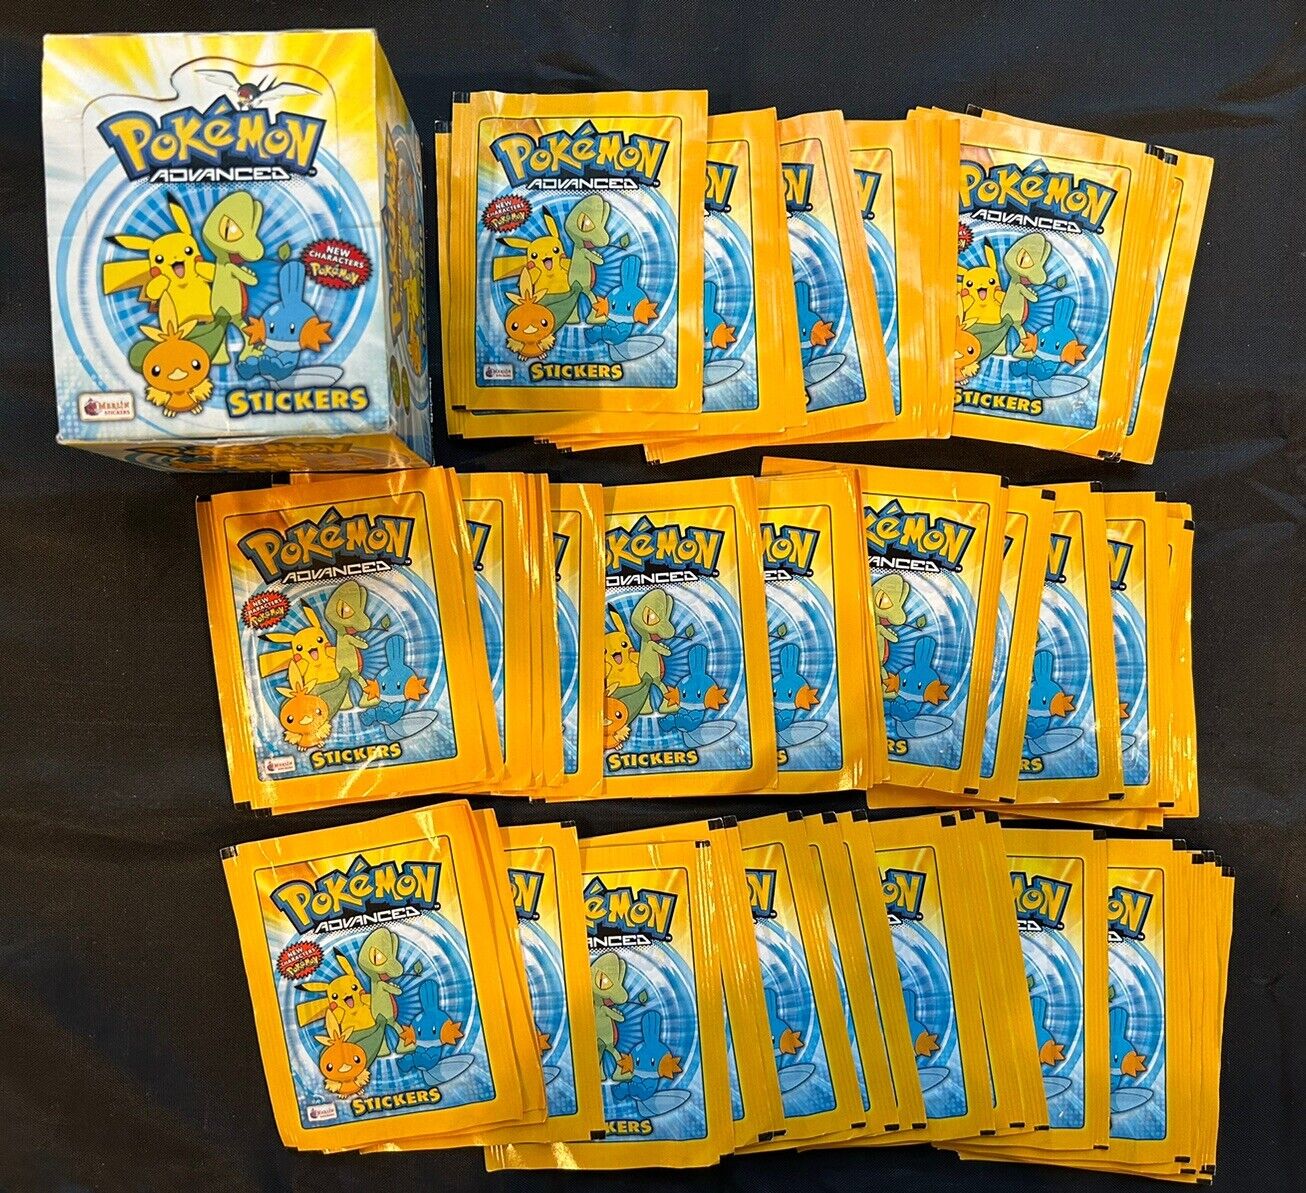 2004 Merlin Pokemon Advanced Series 6 Vintage Sealed Sticker Packs - Lot 50x